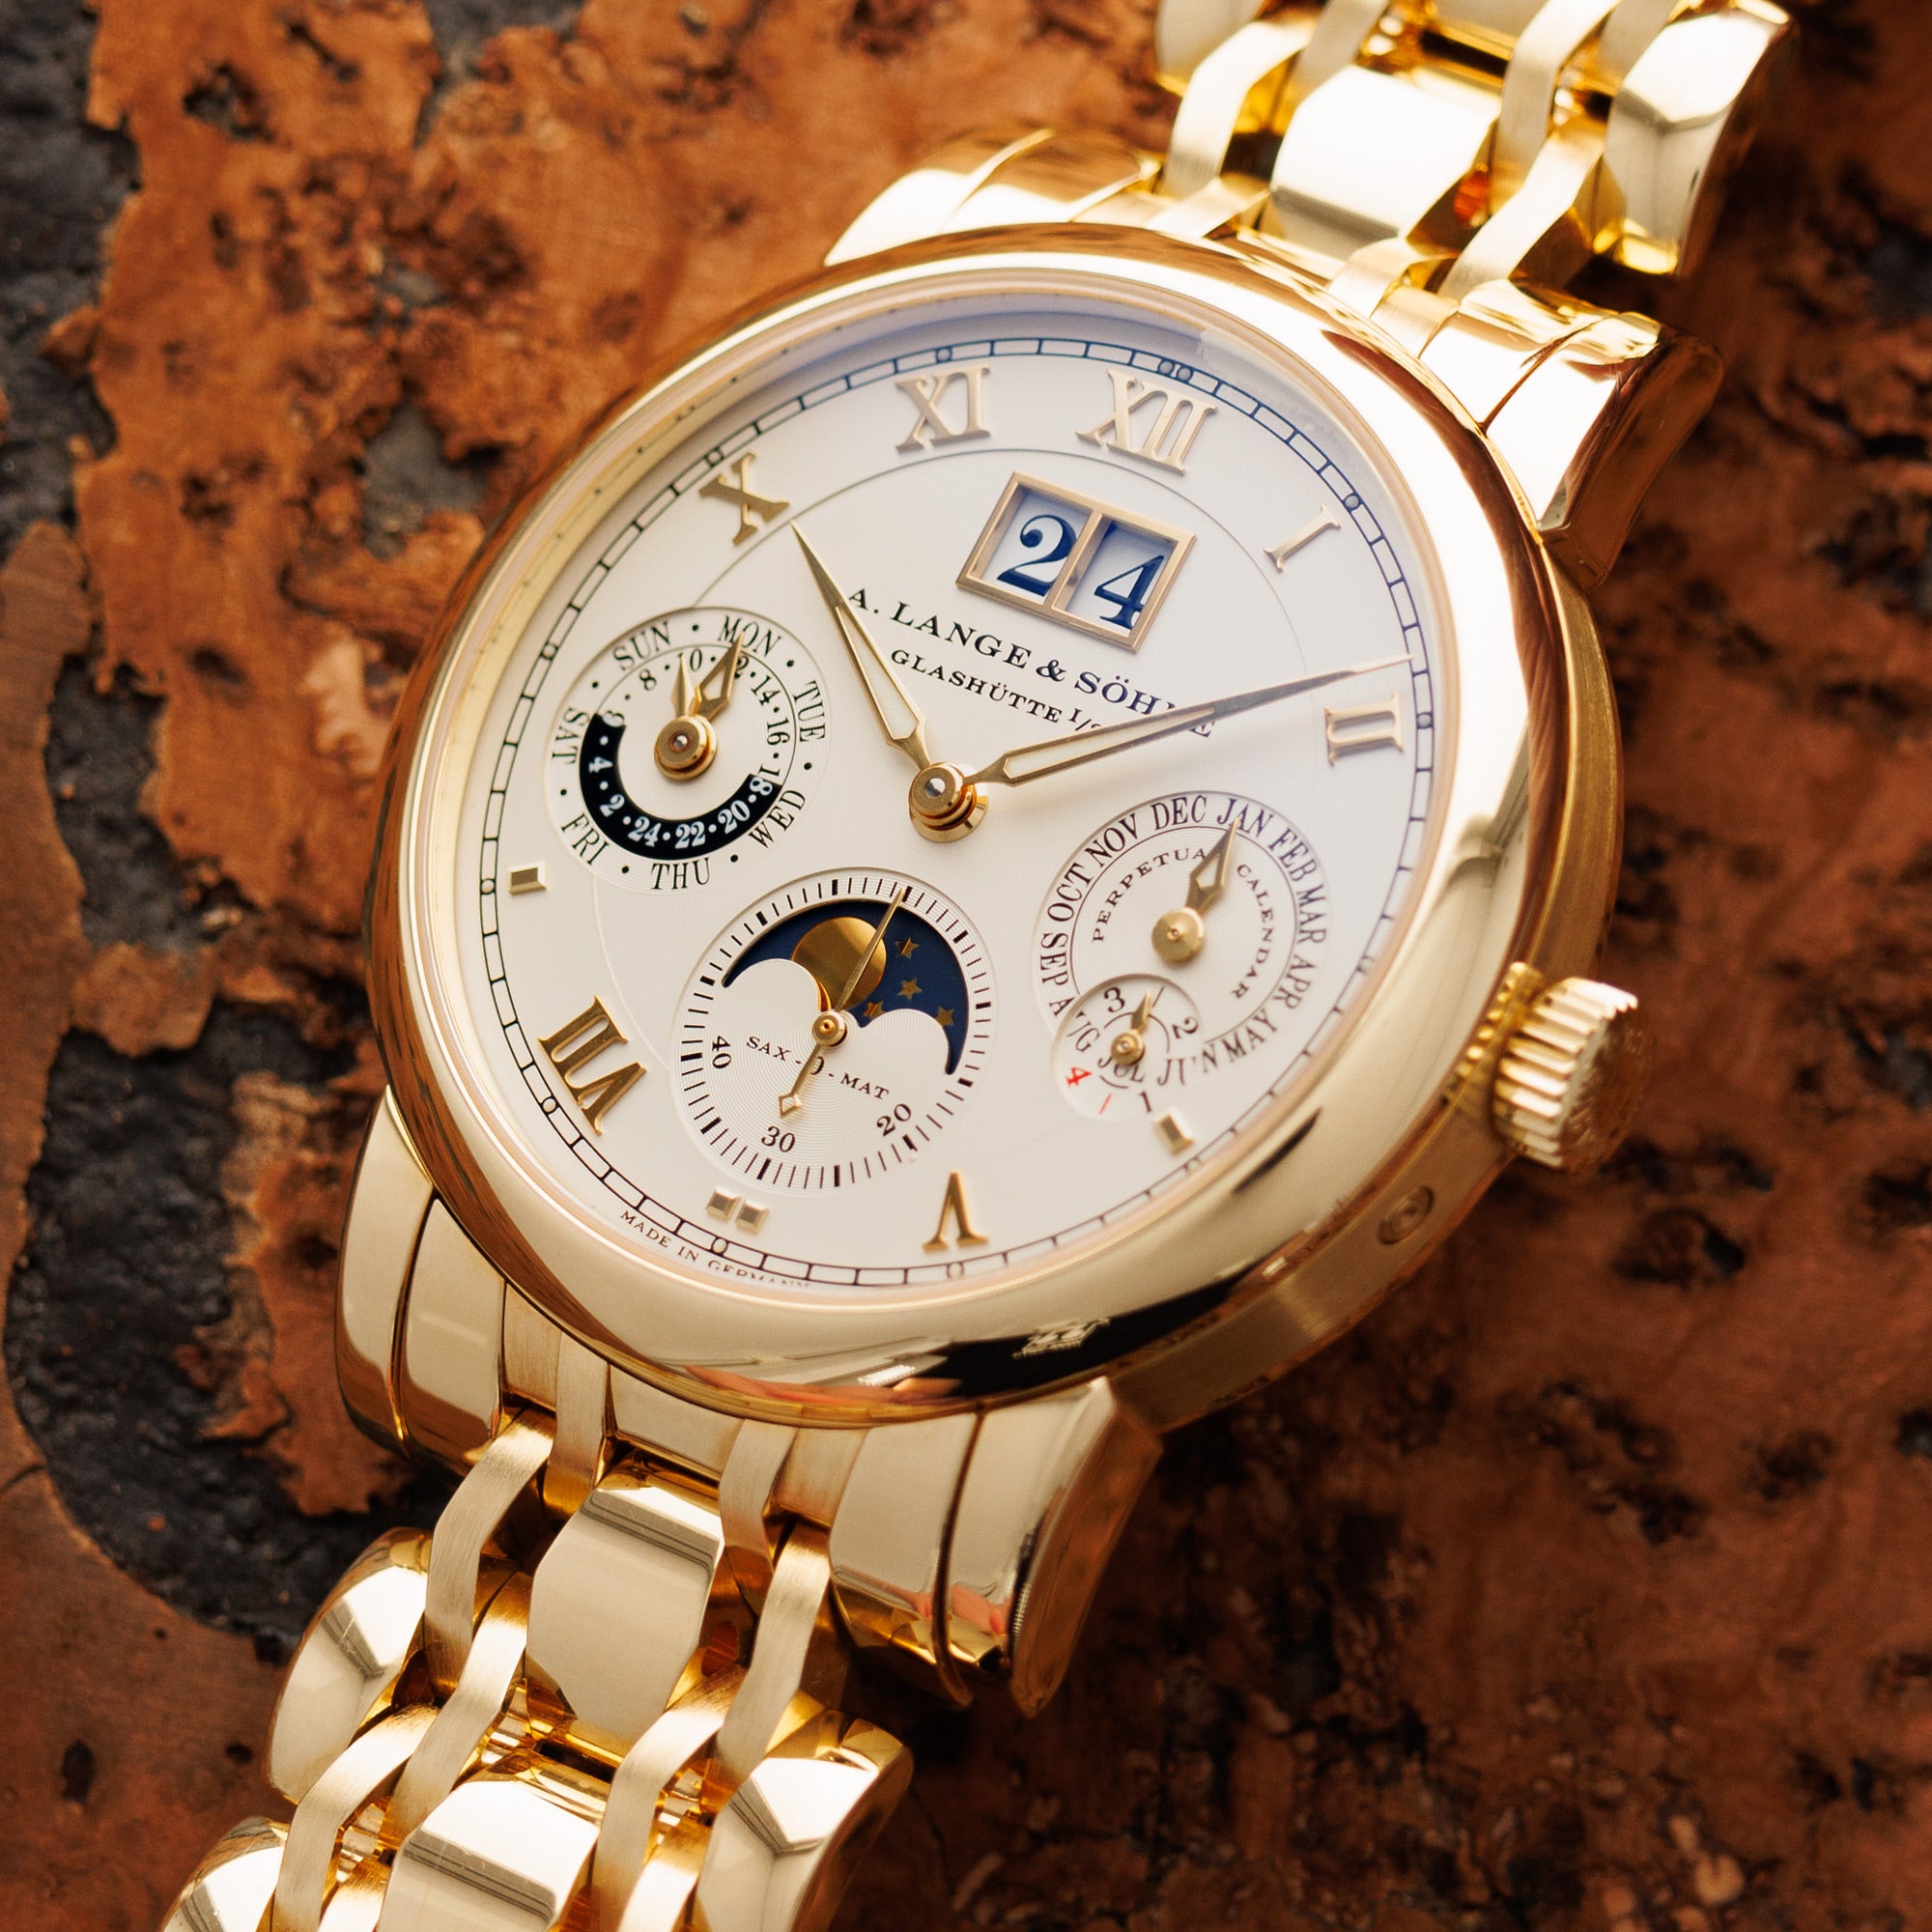 A. Lange & Sohne - A. Lange & Sohne Yellow Gold Langematik Perpetual Wellendorf Bracelet Ref 310.221 - The Keystone Watches